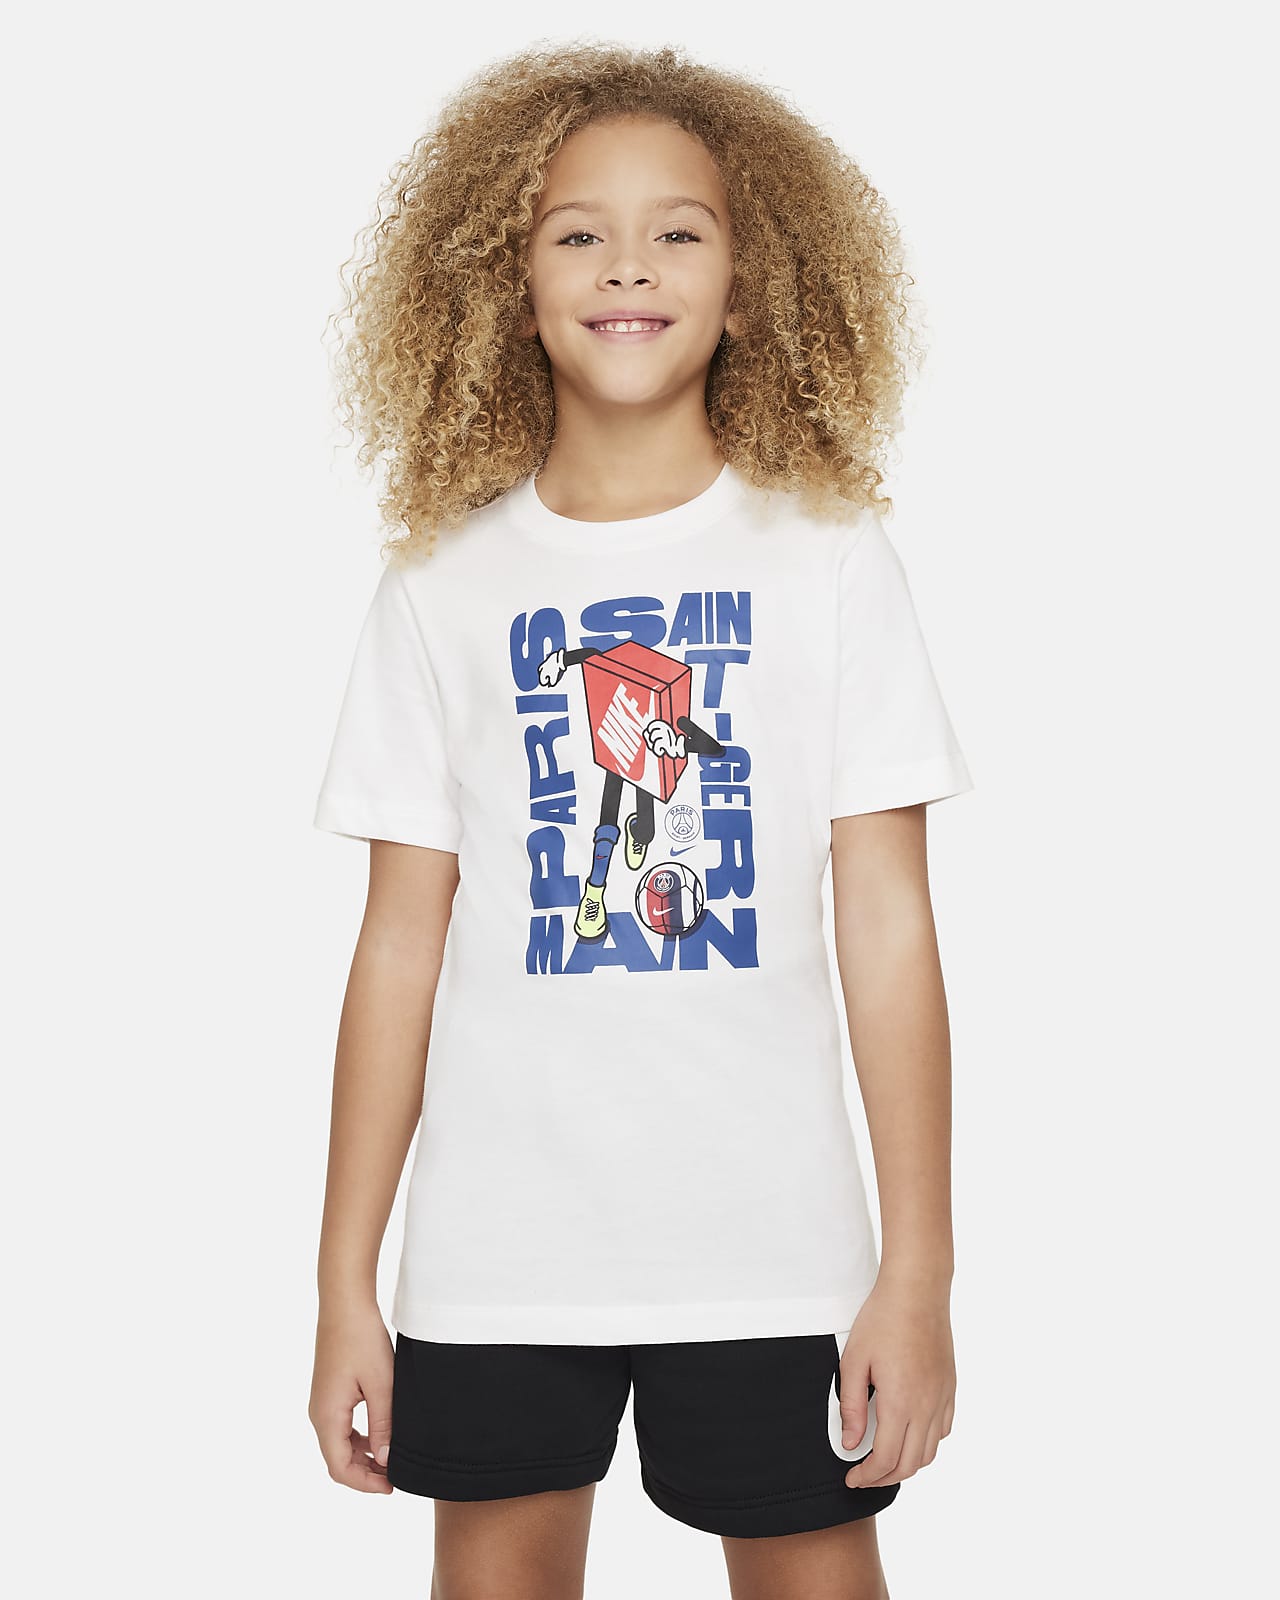 NIKE/Camiseta De Fútbol Niño Personificable Psg Local Nike